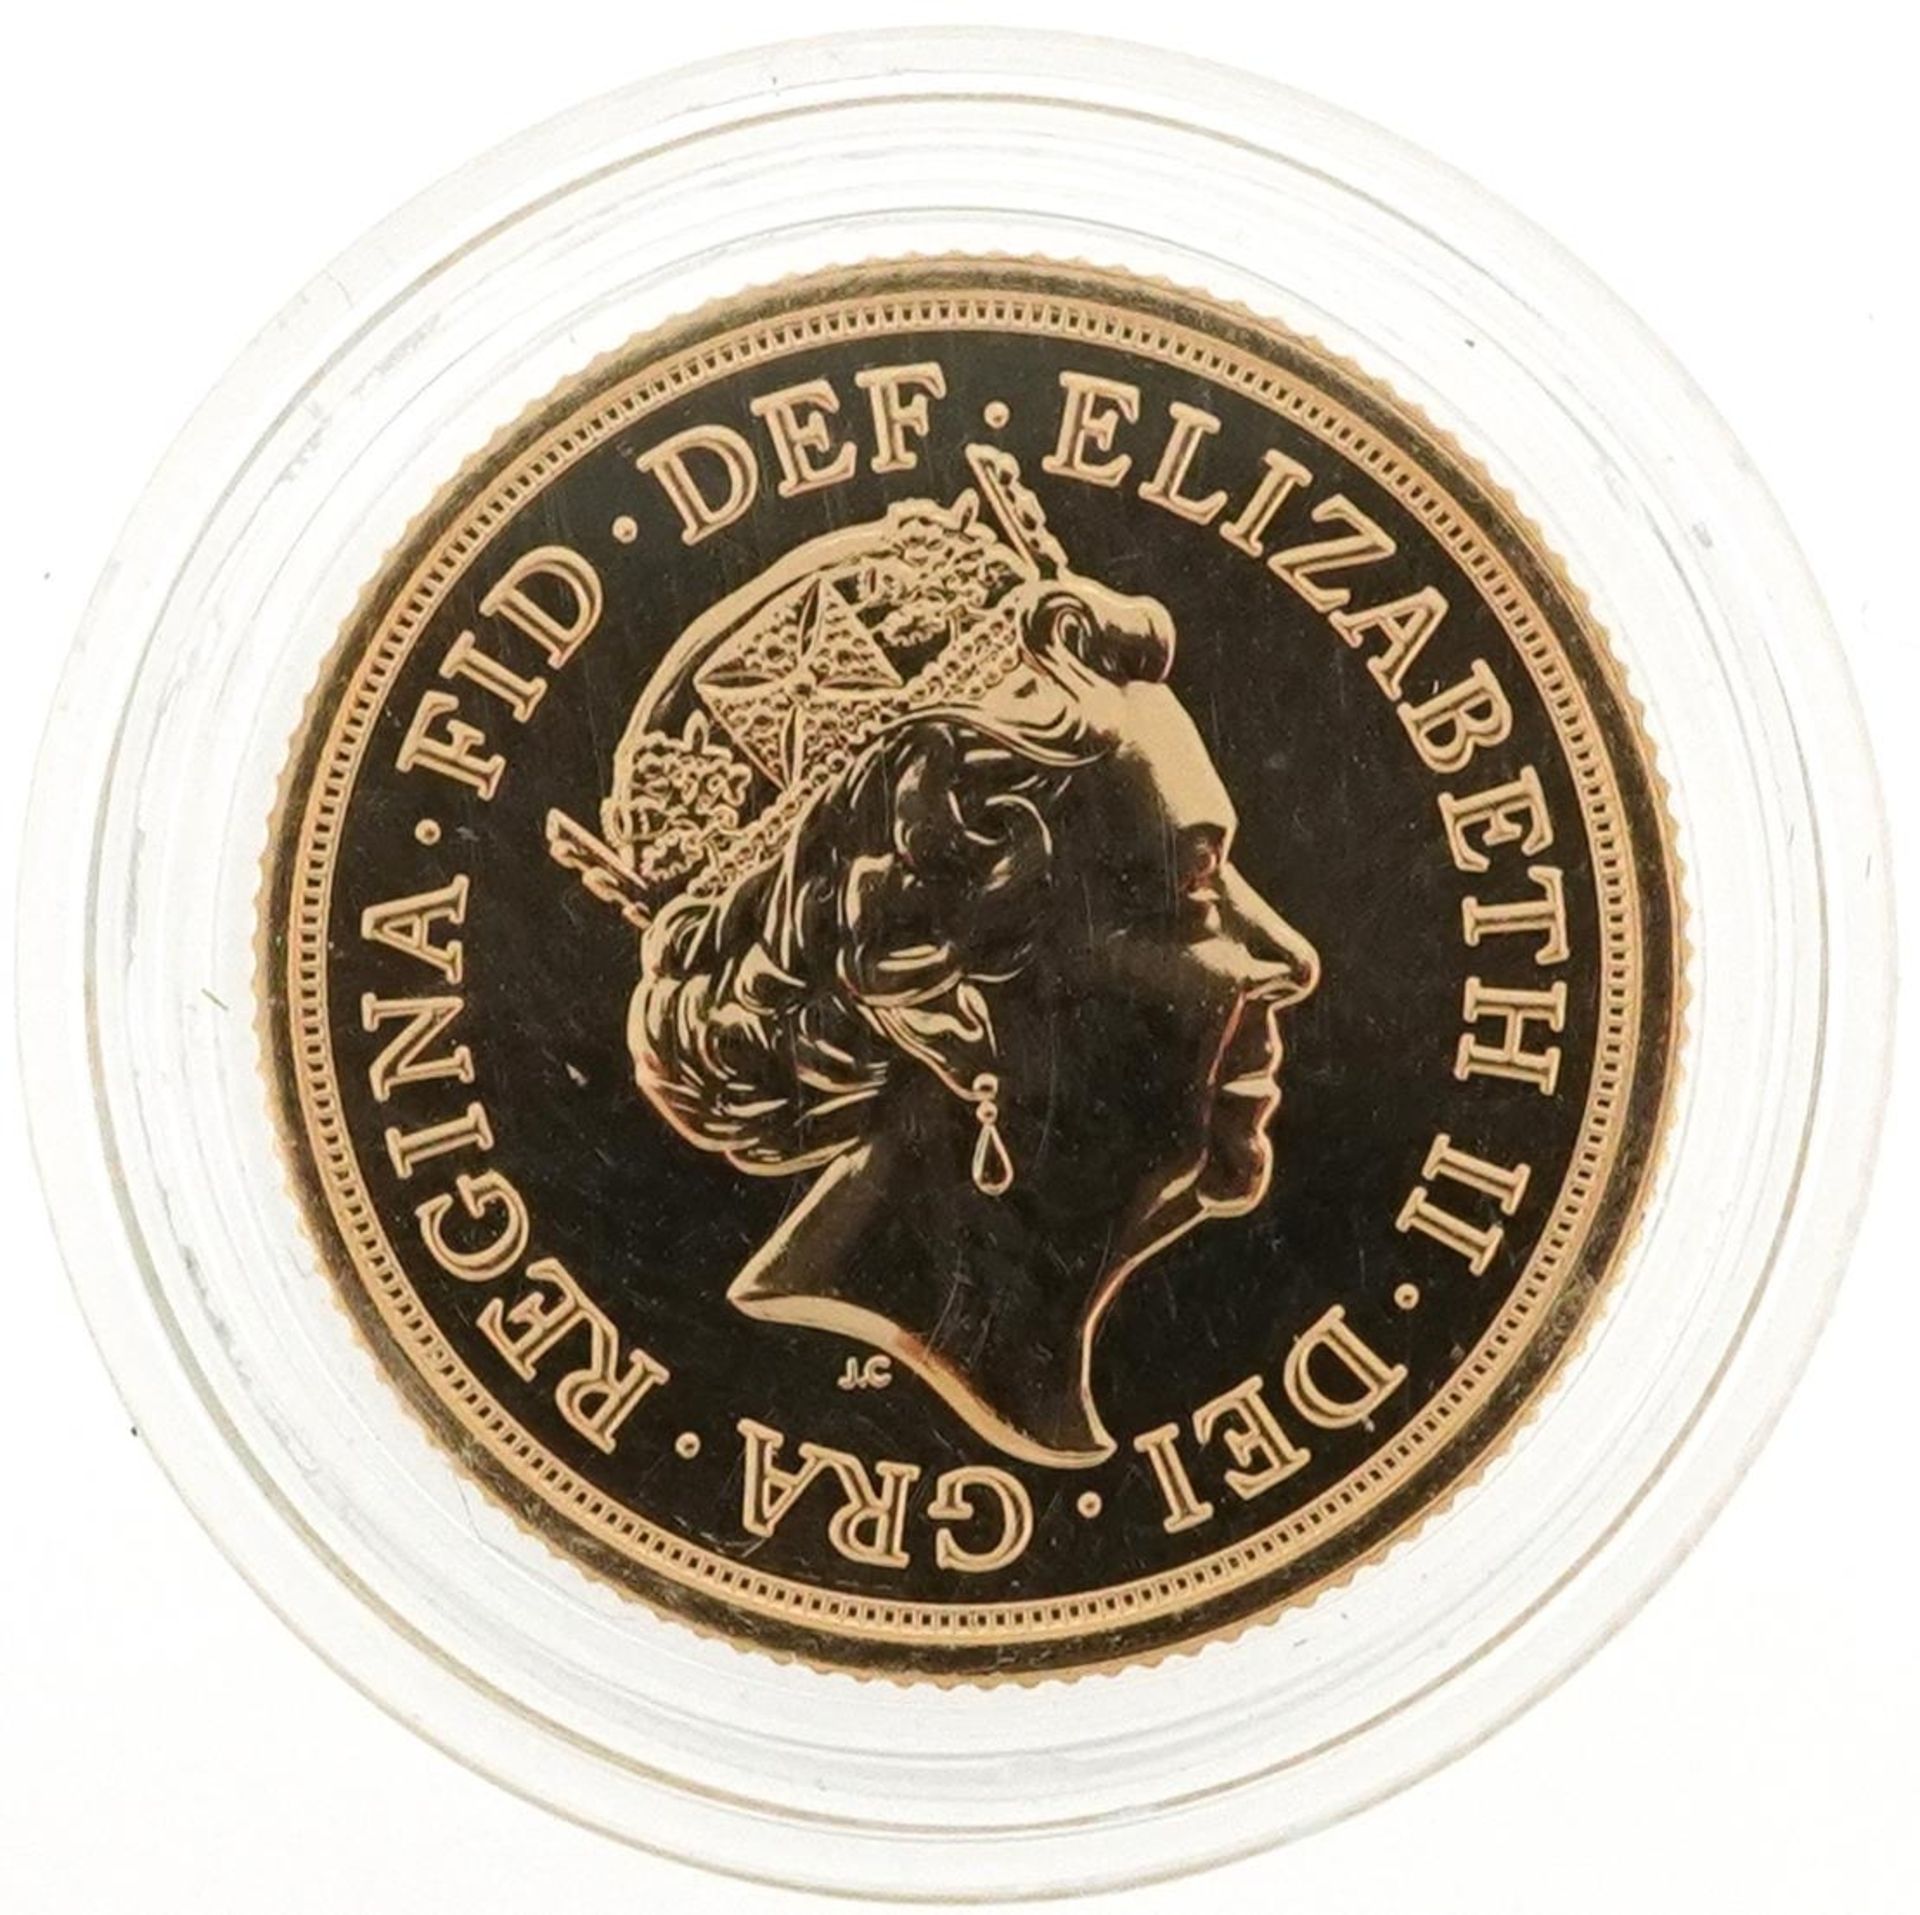 Elizabeth II 2022 Royal Coat of Arms gold sovereign - Image 2 of 2